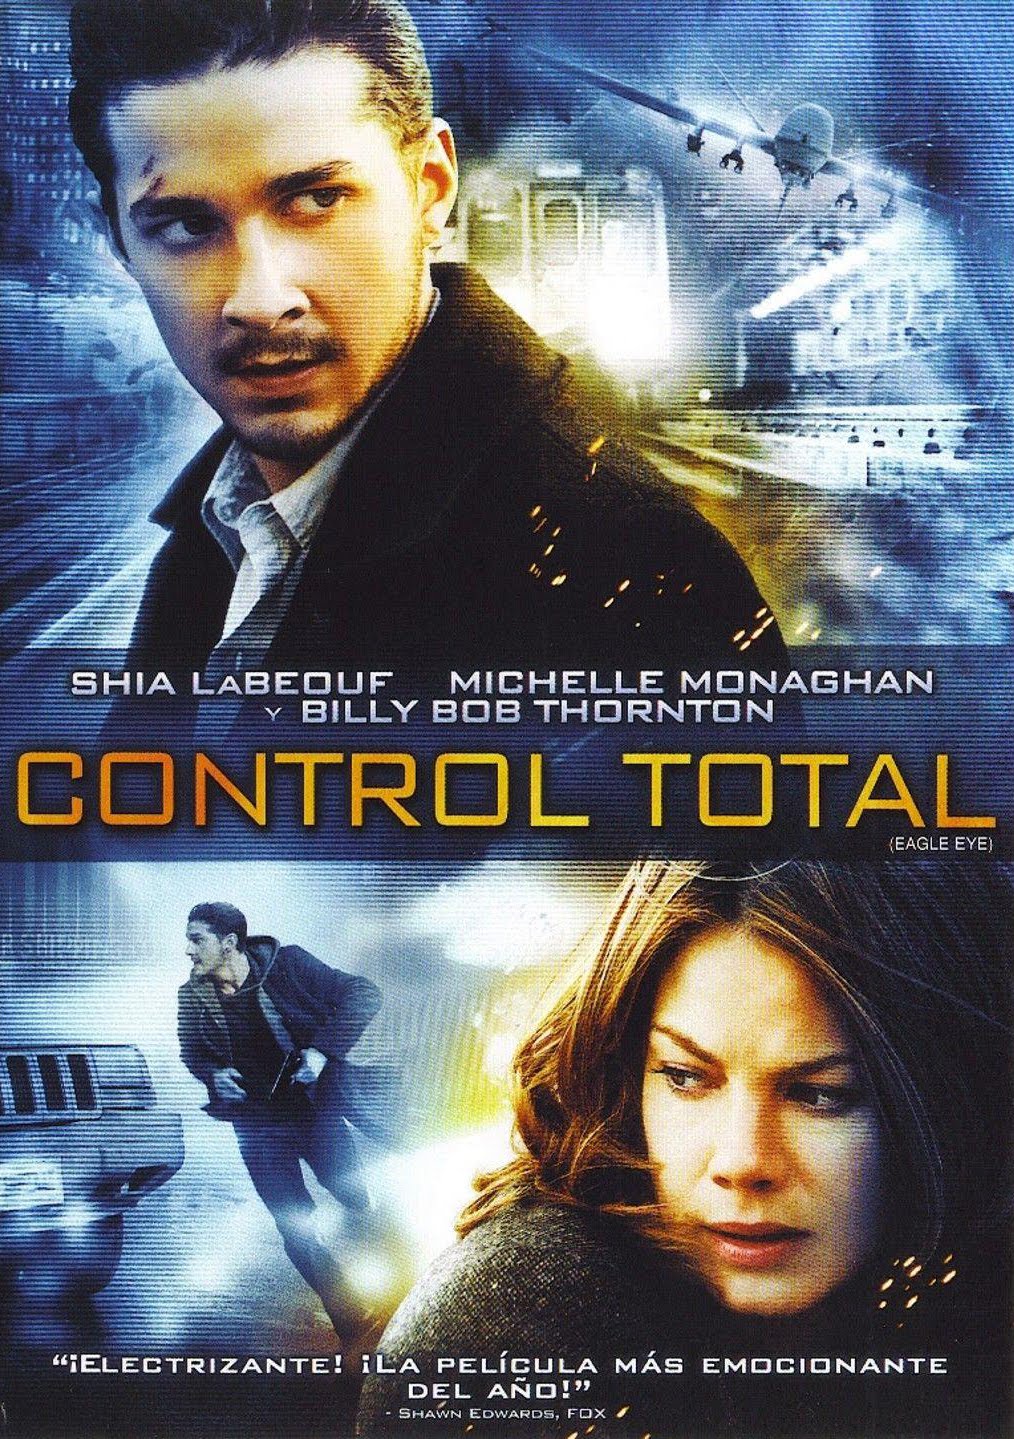 Control total